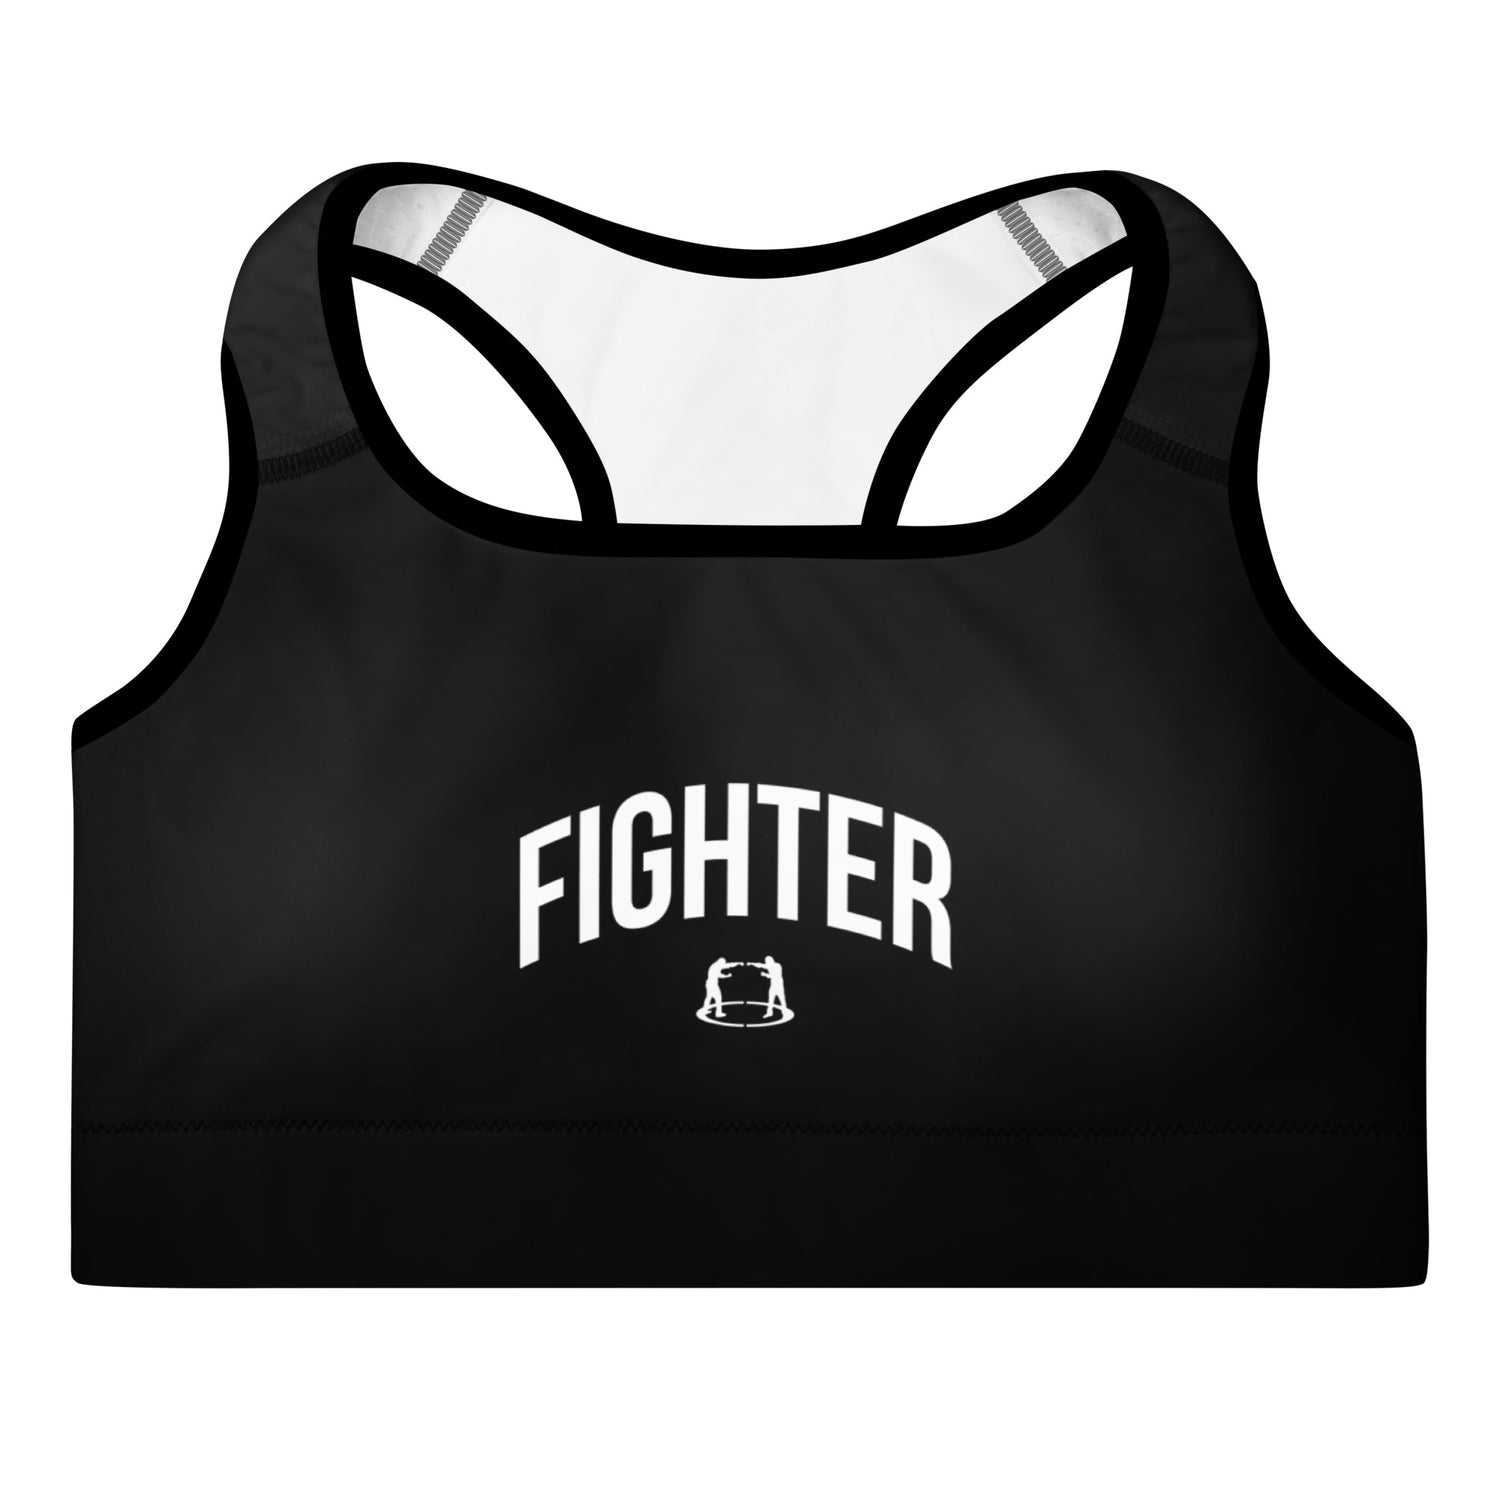 EverybodyFights "Fighter" Sports Bra